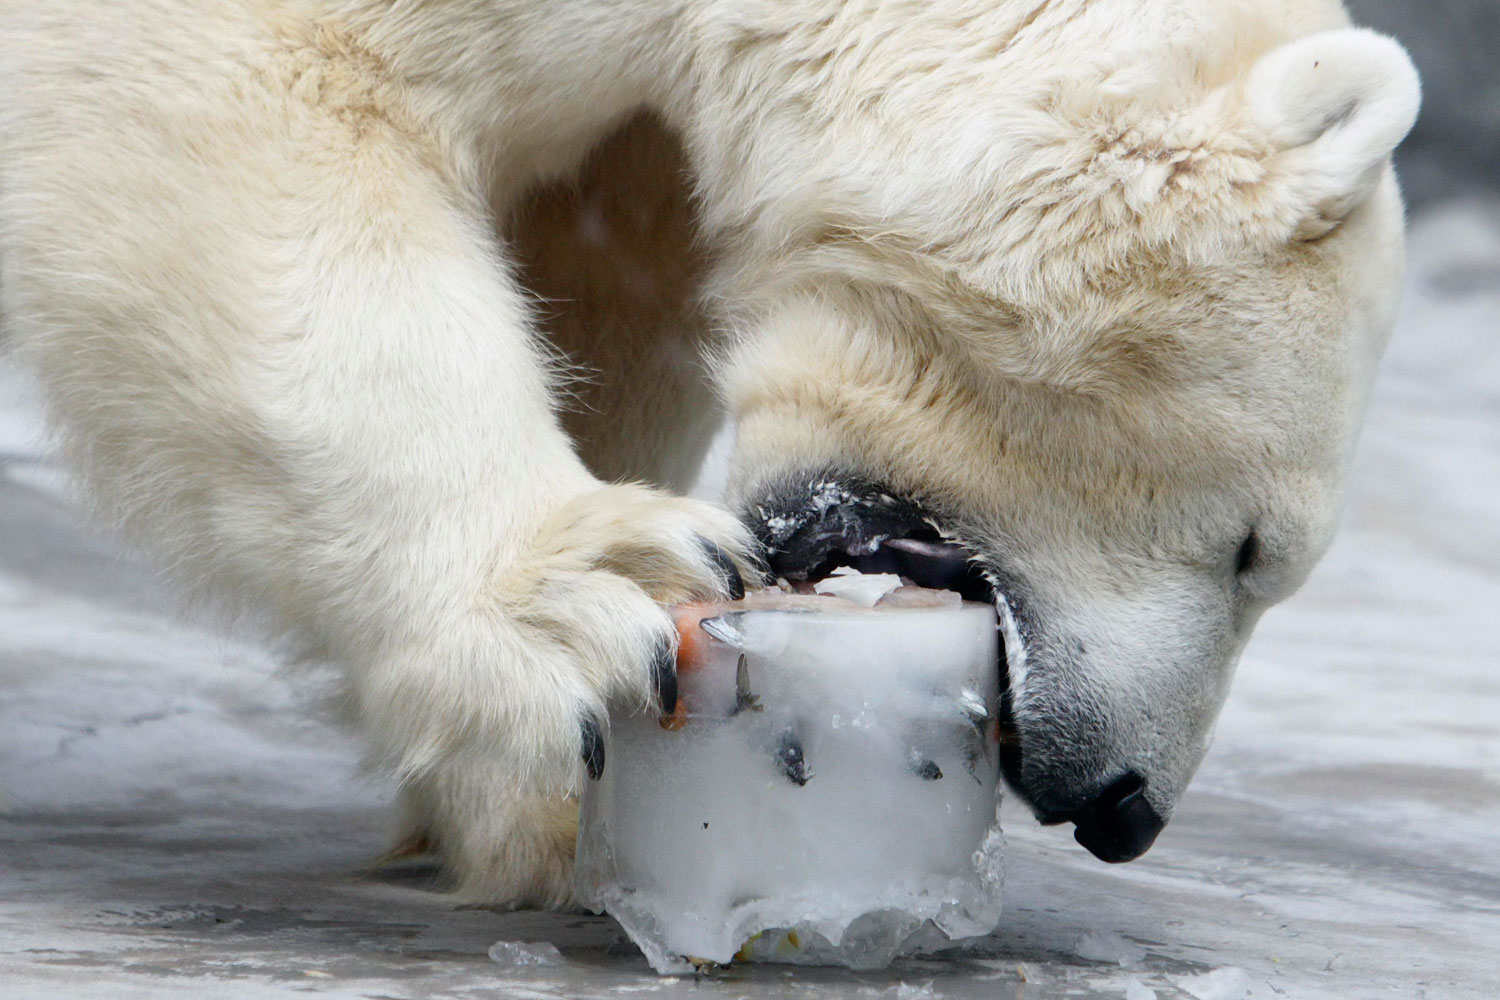 A polar bear eats an ice fruit cake inside its enclosure at Prague Zoo, July 26, 2011.